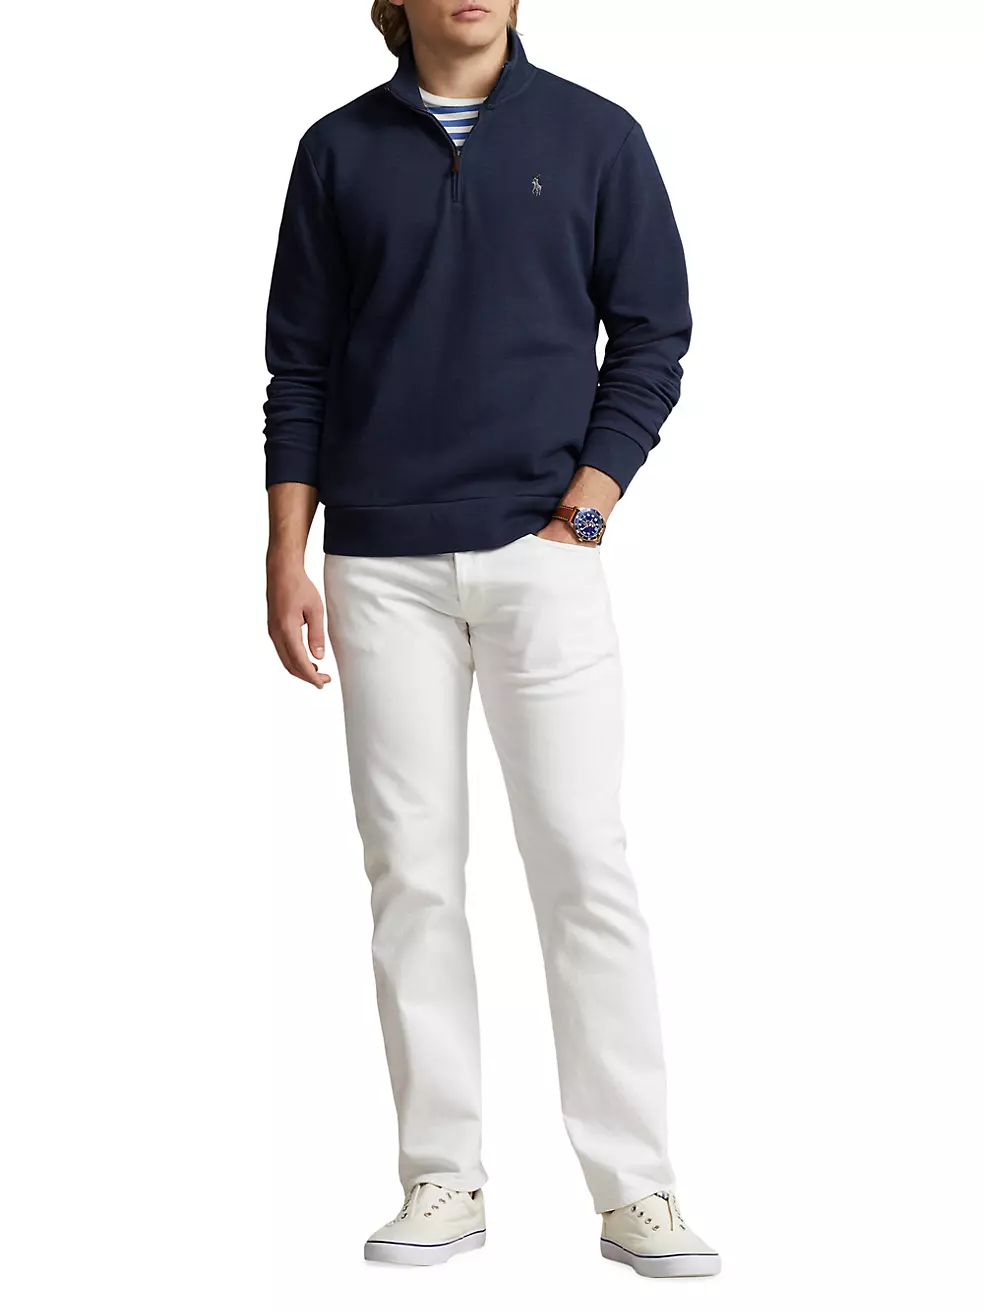 Cotton-Blend Quarter-Zip Sweatshirt